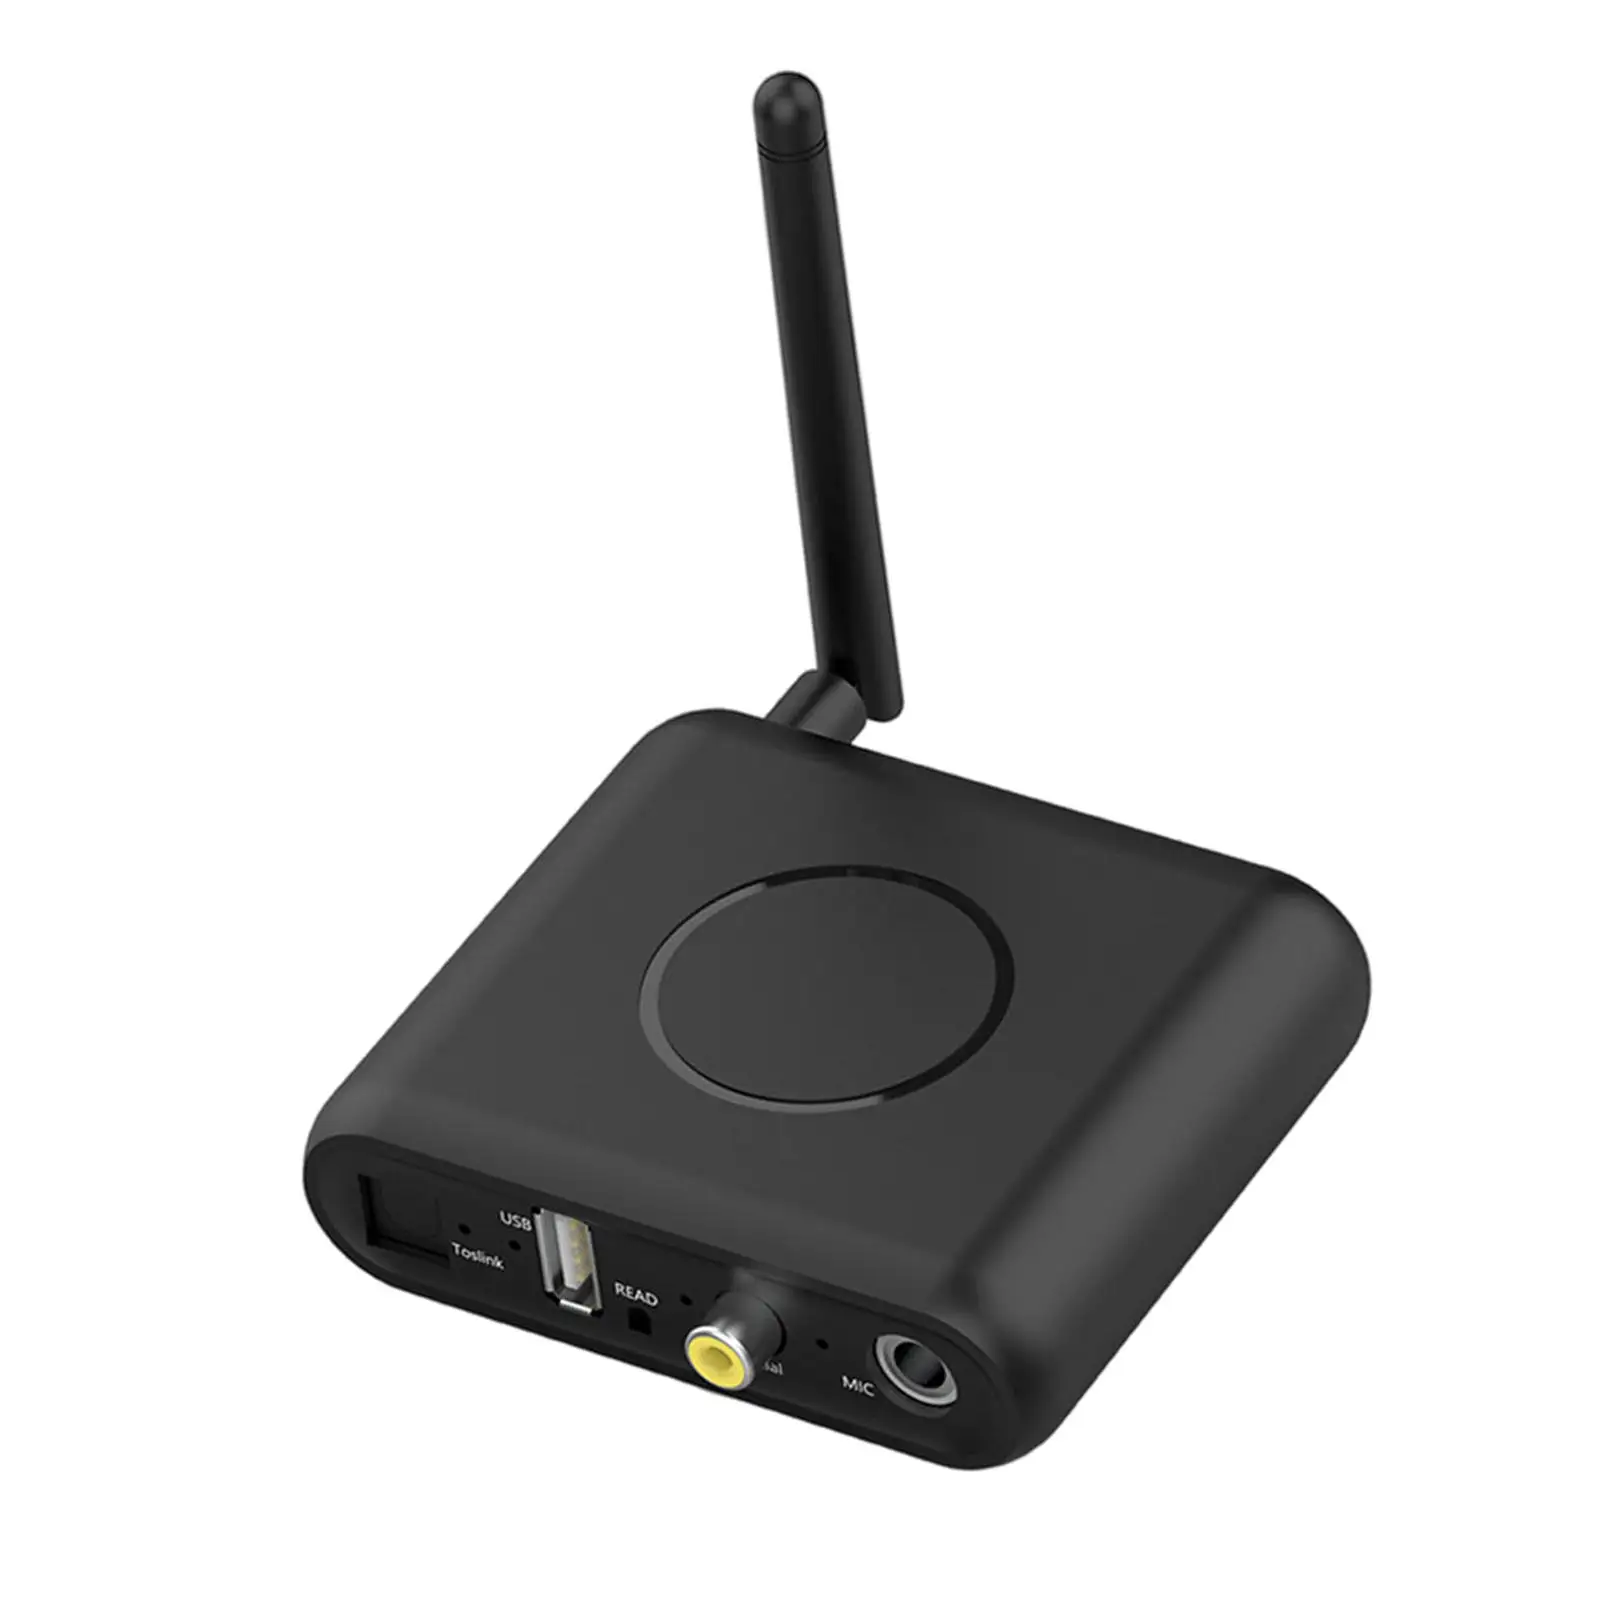 Wireless Bluetooth 5.0 Digital to Analog Audio Converter Remote Control Audio DAC Decoder Adapter Professional RCA & 3.5mm Black